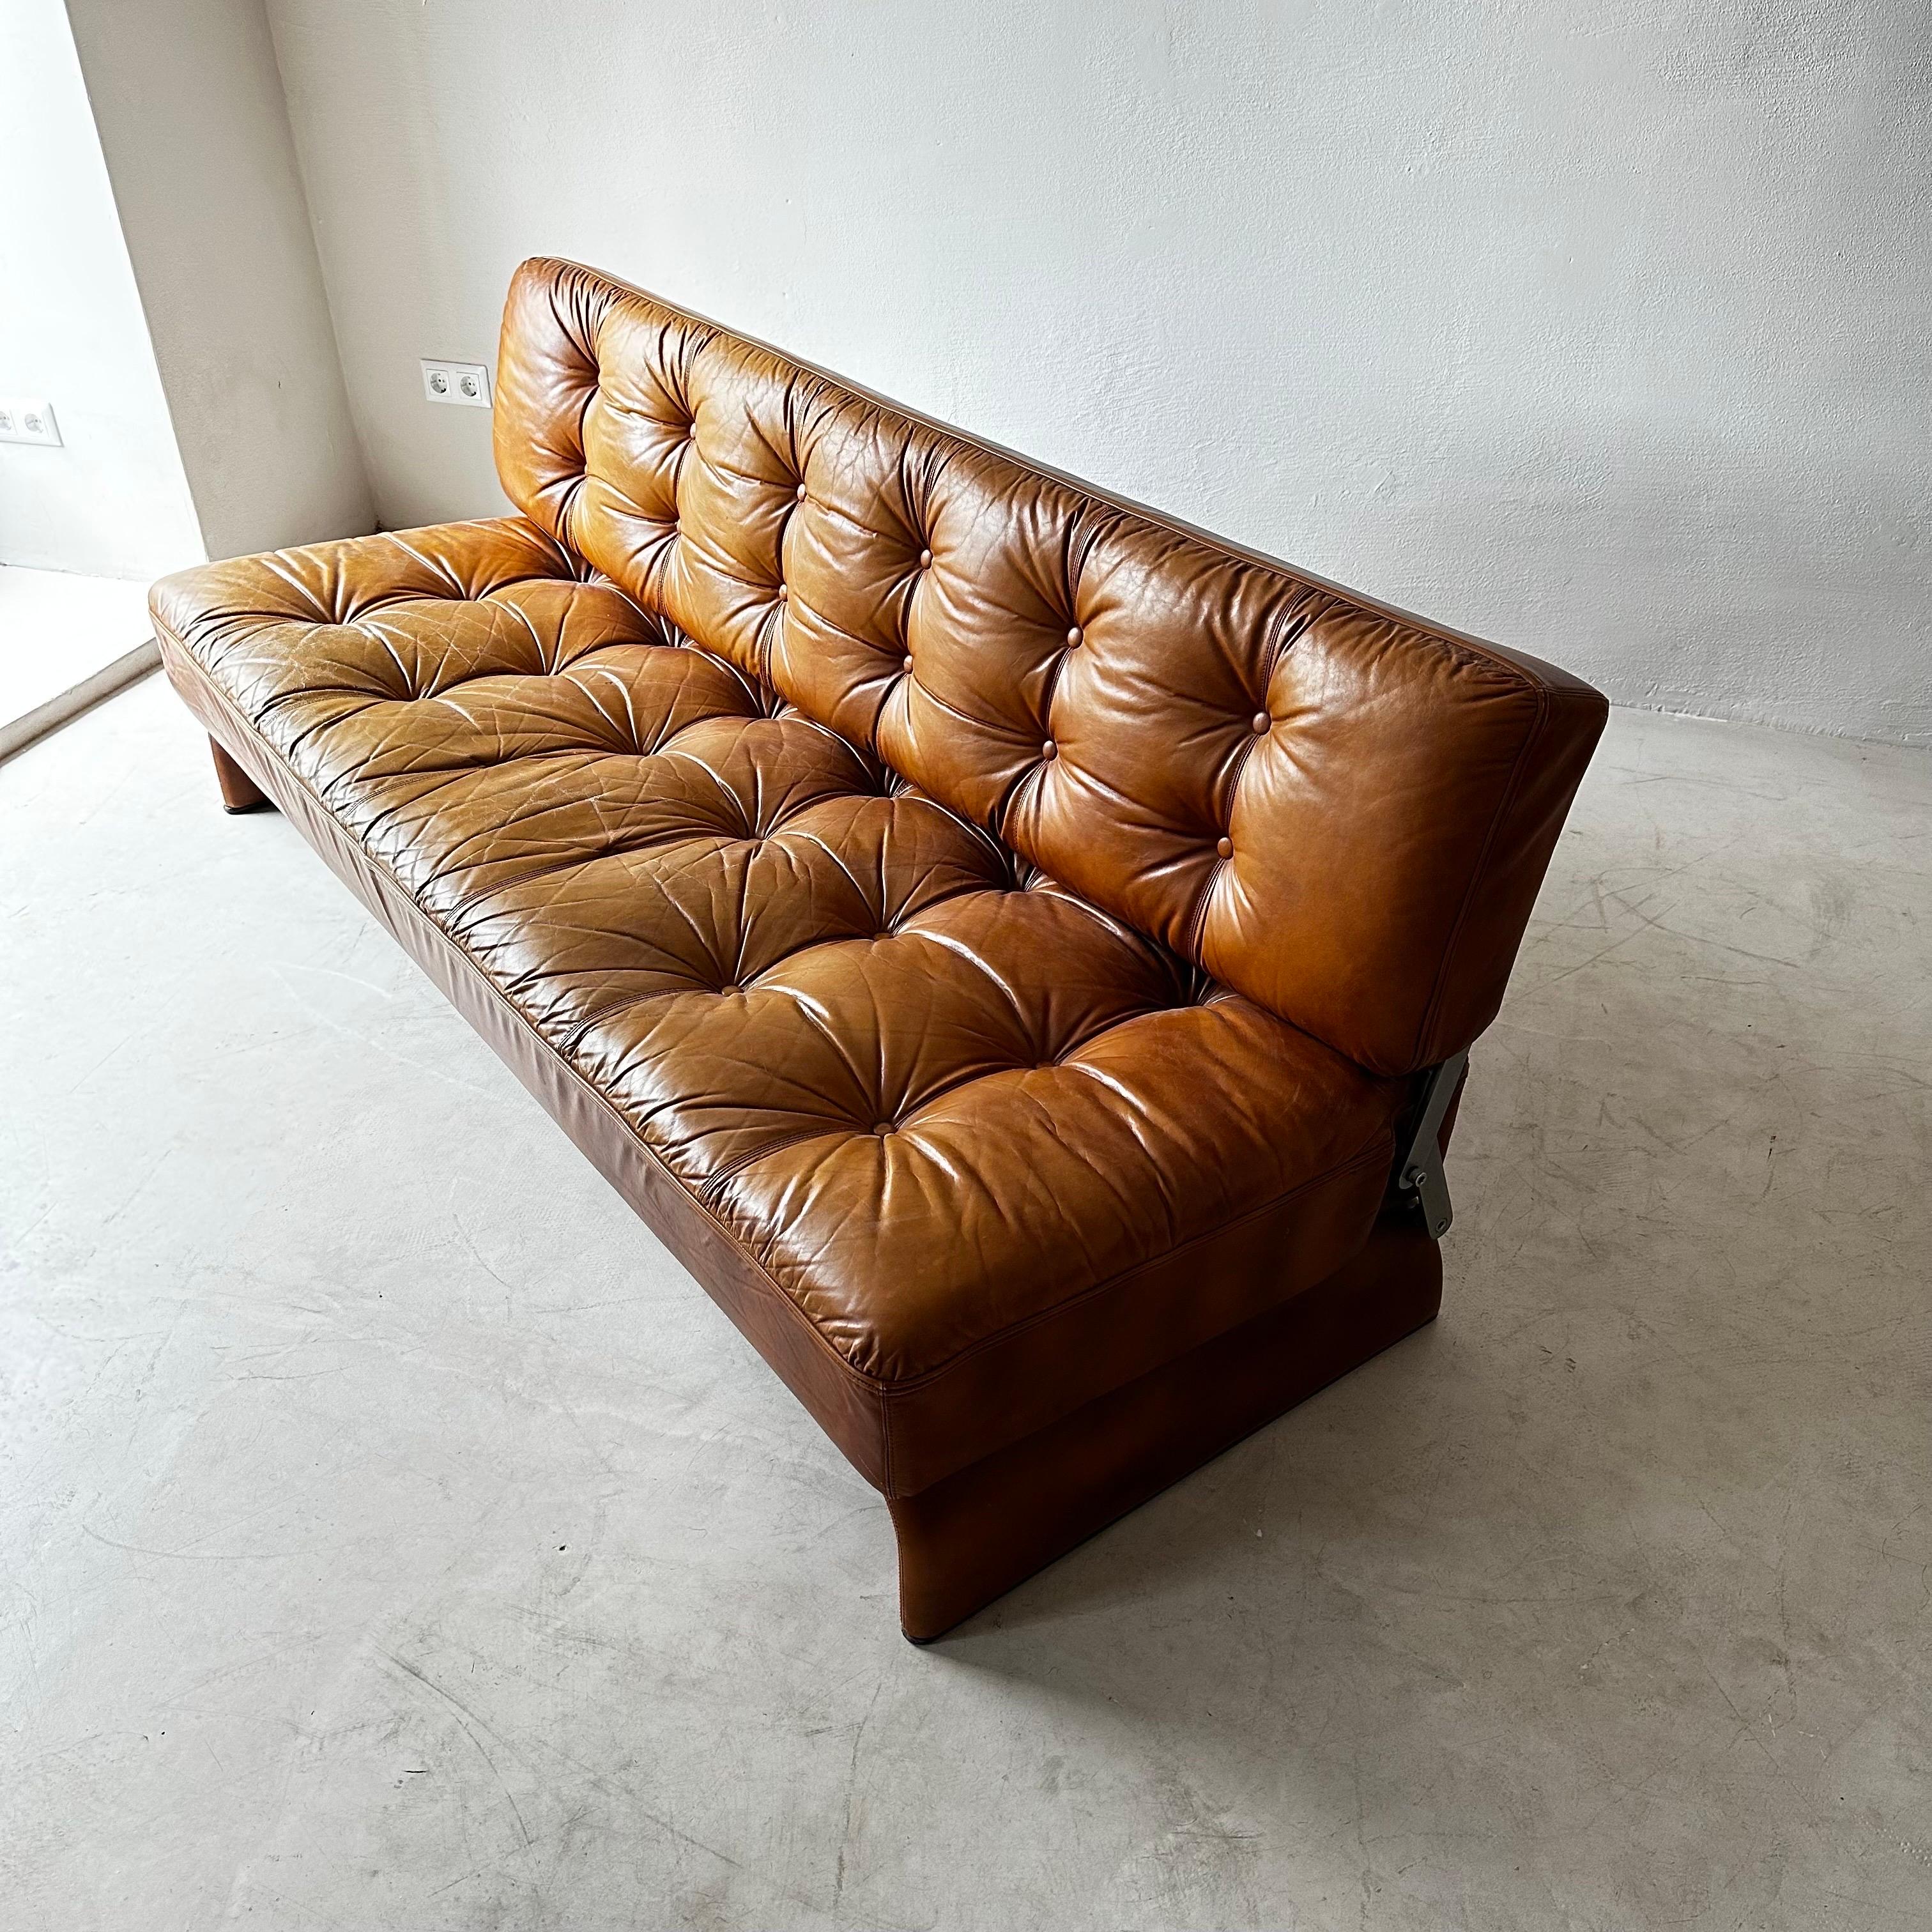 Austrian Johannes Spalt for Wittmann 'Constanze' Sofa in Cognac Leather For Sale